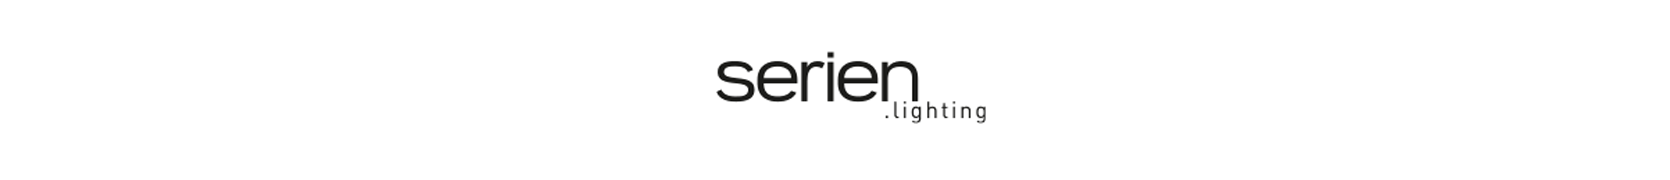 Serien lighting  Kundenlogos Banner 2021 .png